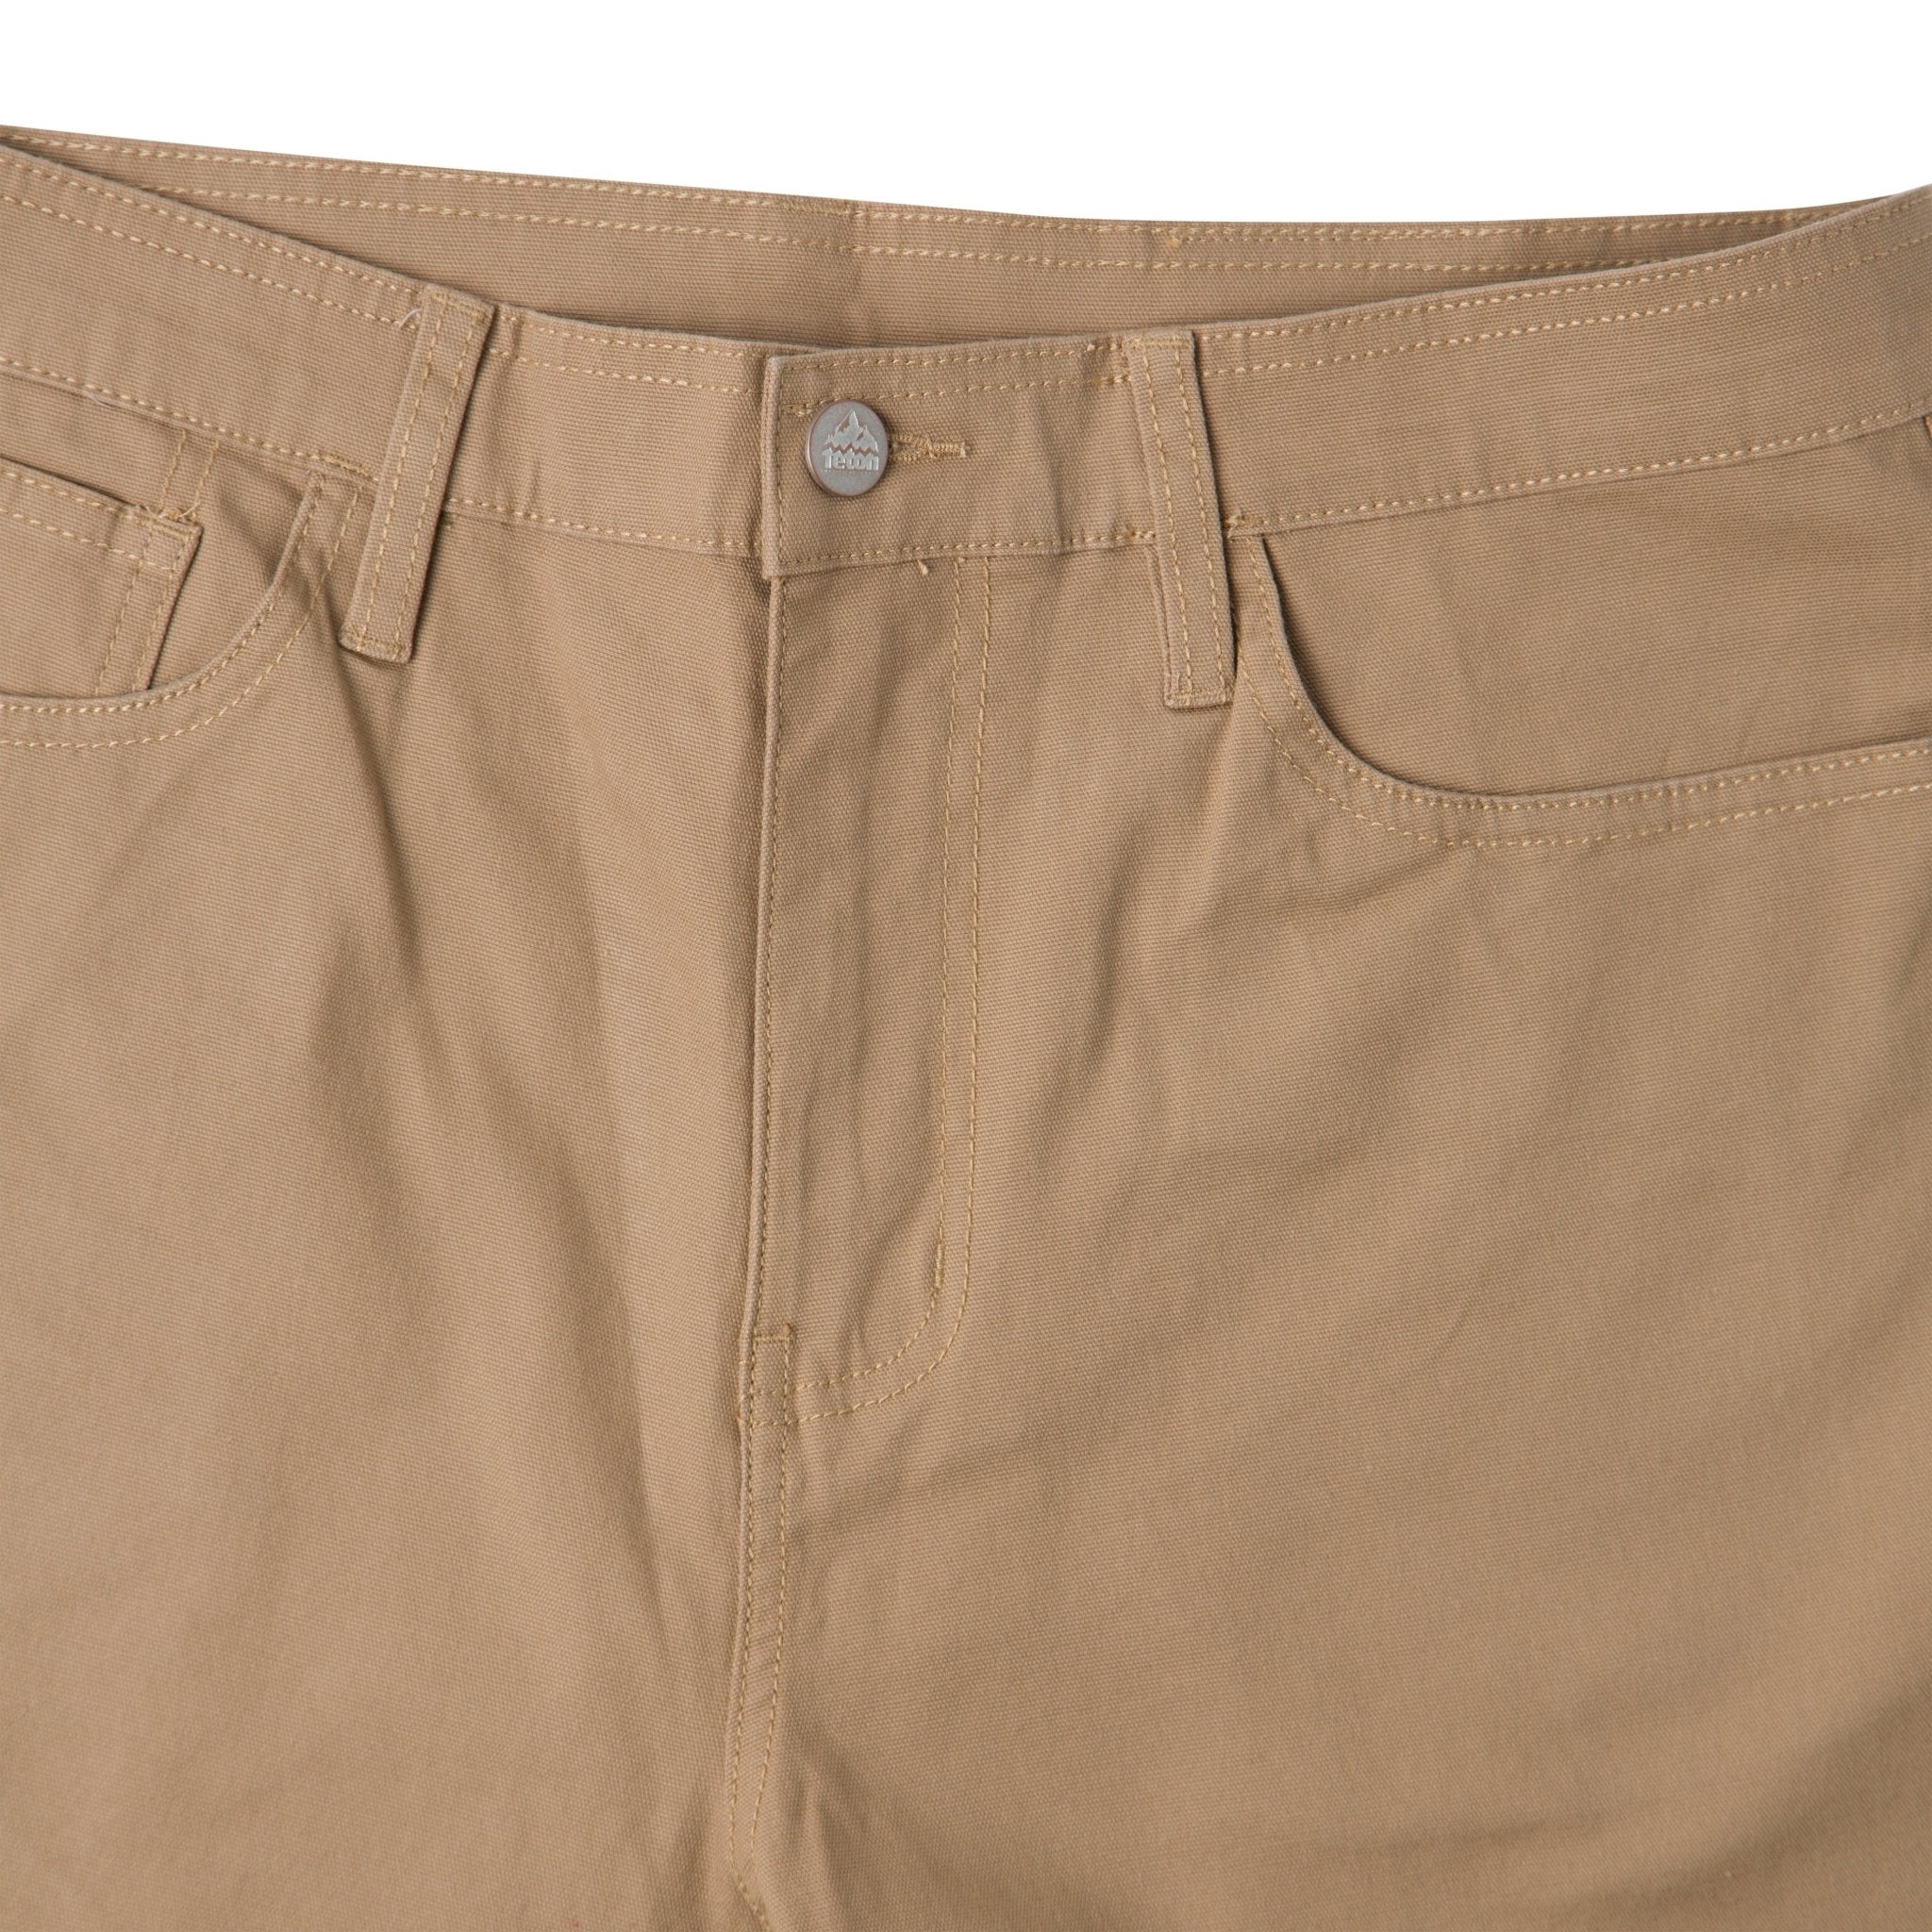 Ketchikan 5 Pocket Work Pants - Slim Fit - Teton Gravity Research